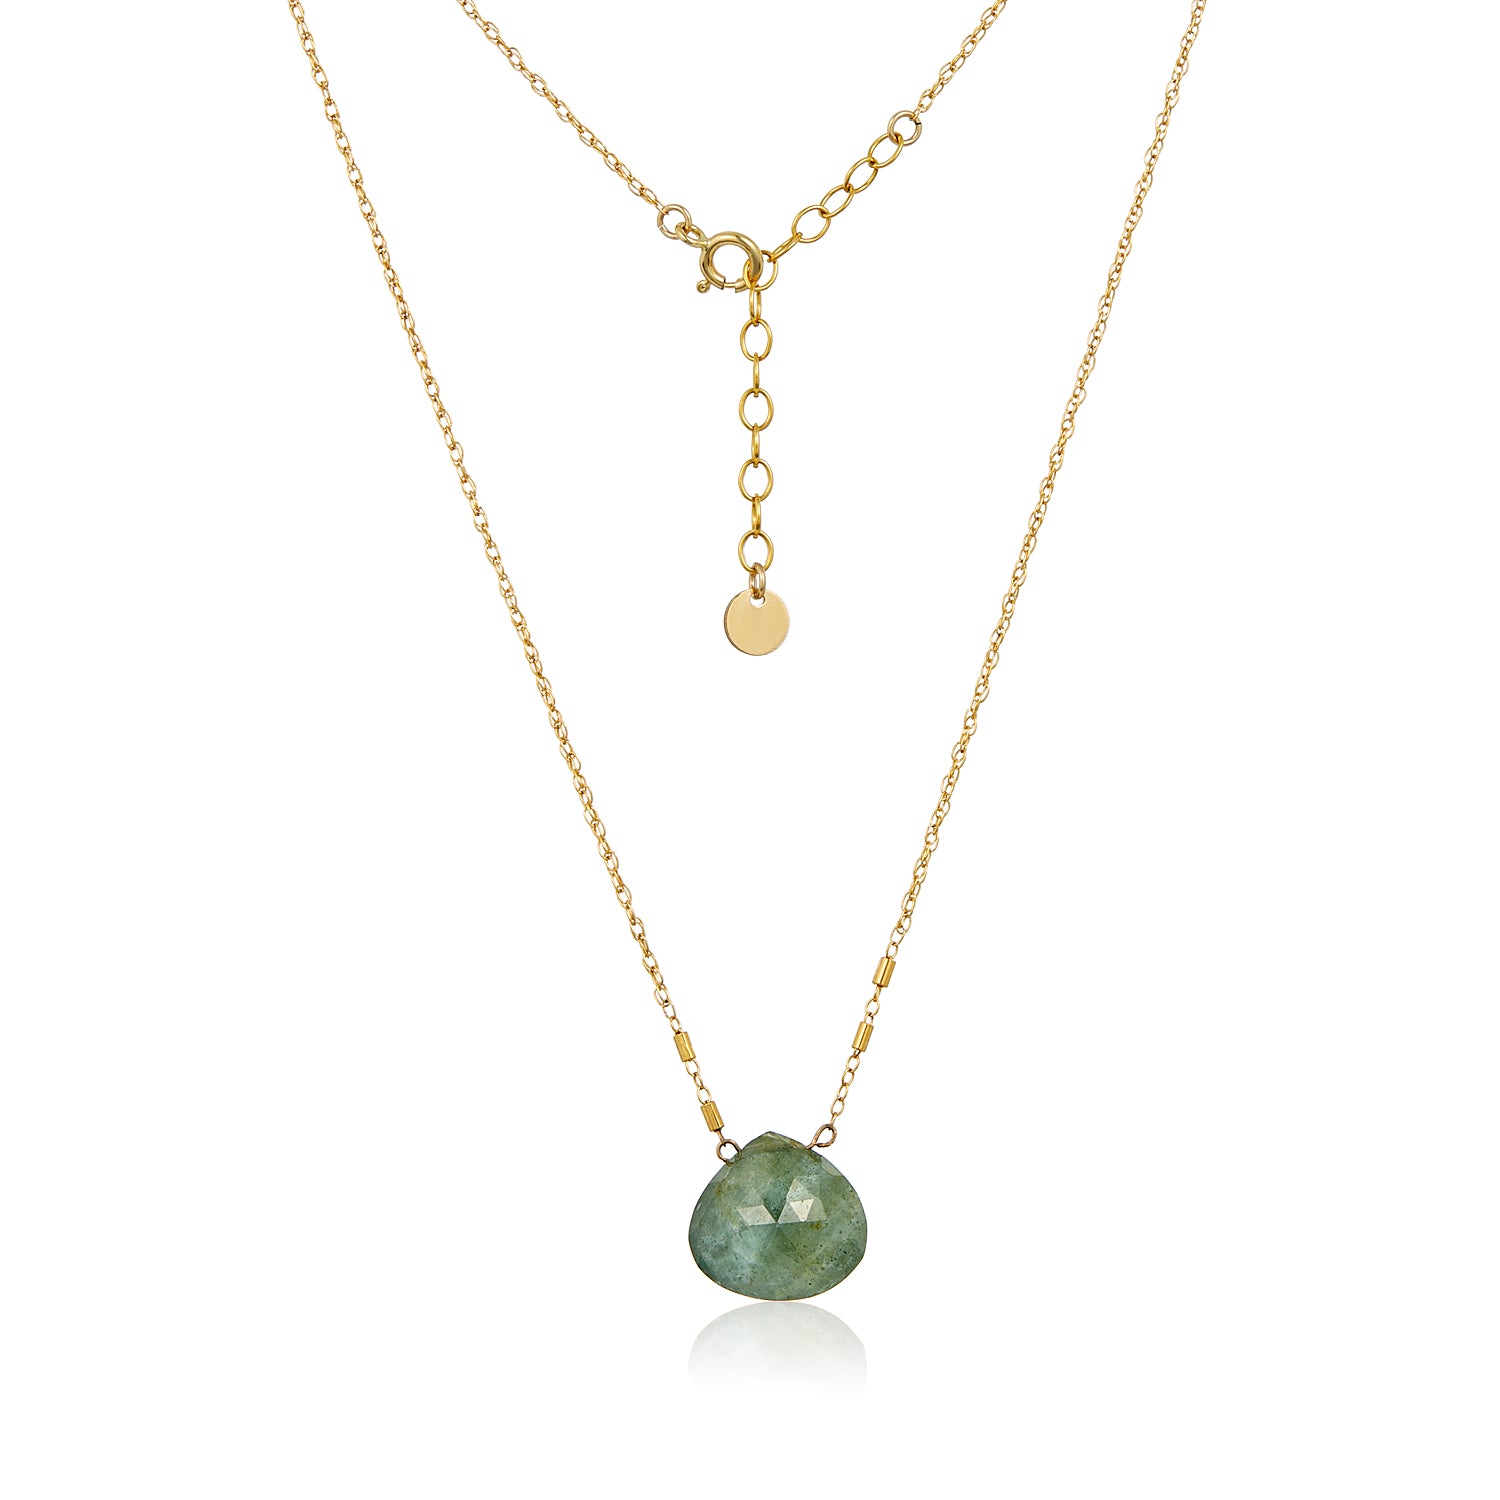 Pear-shaped Moss Aquamarine Pendant Necklace